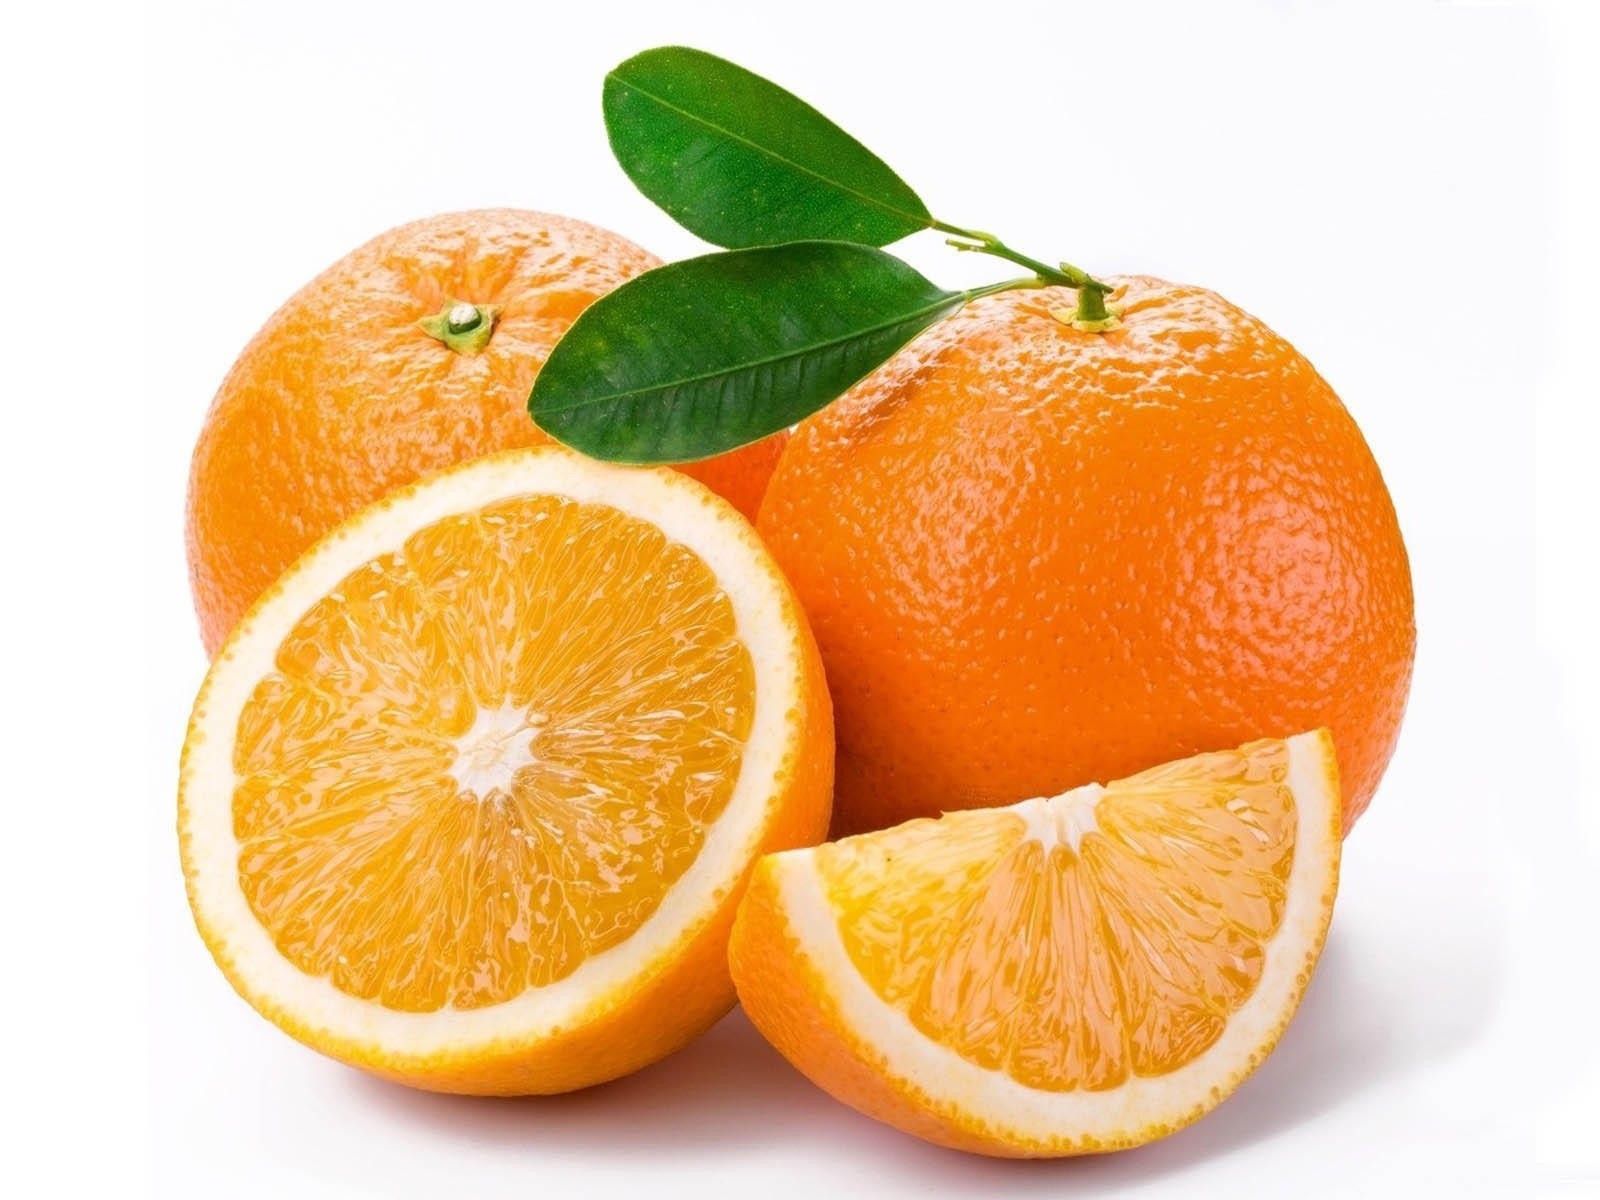 https://blogger.googleusercontent.com/img/b/R29vZ2xl/AVvXsEhaamzq62itsRgKozAc9o3yukxUE9TVbpcnKHaEcRO6P1sIHramyK48C6c443RHOoDFZVccp35BycjE71aw2TNb8QRinKlfYmzRFv1TvTxOsIHrH32TBiYGQO6LrS8Bgjl6Mu5rdPfnqgqE/s1600/Orange+Fruits+Wallpapers+1.jpg